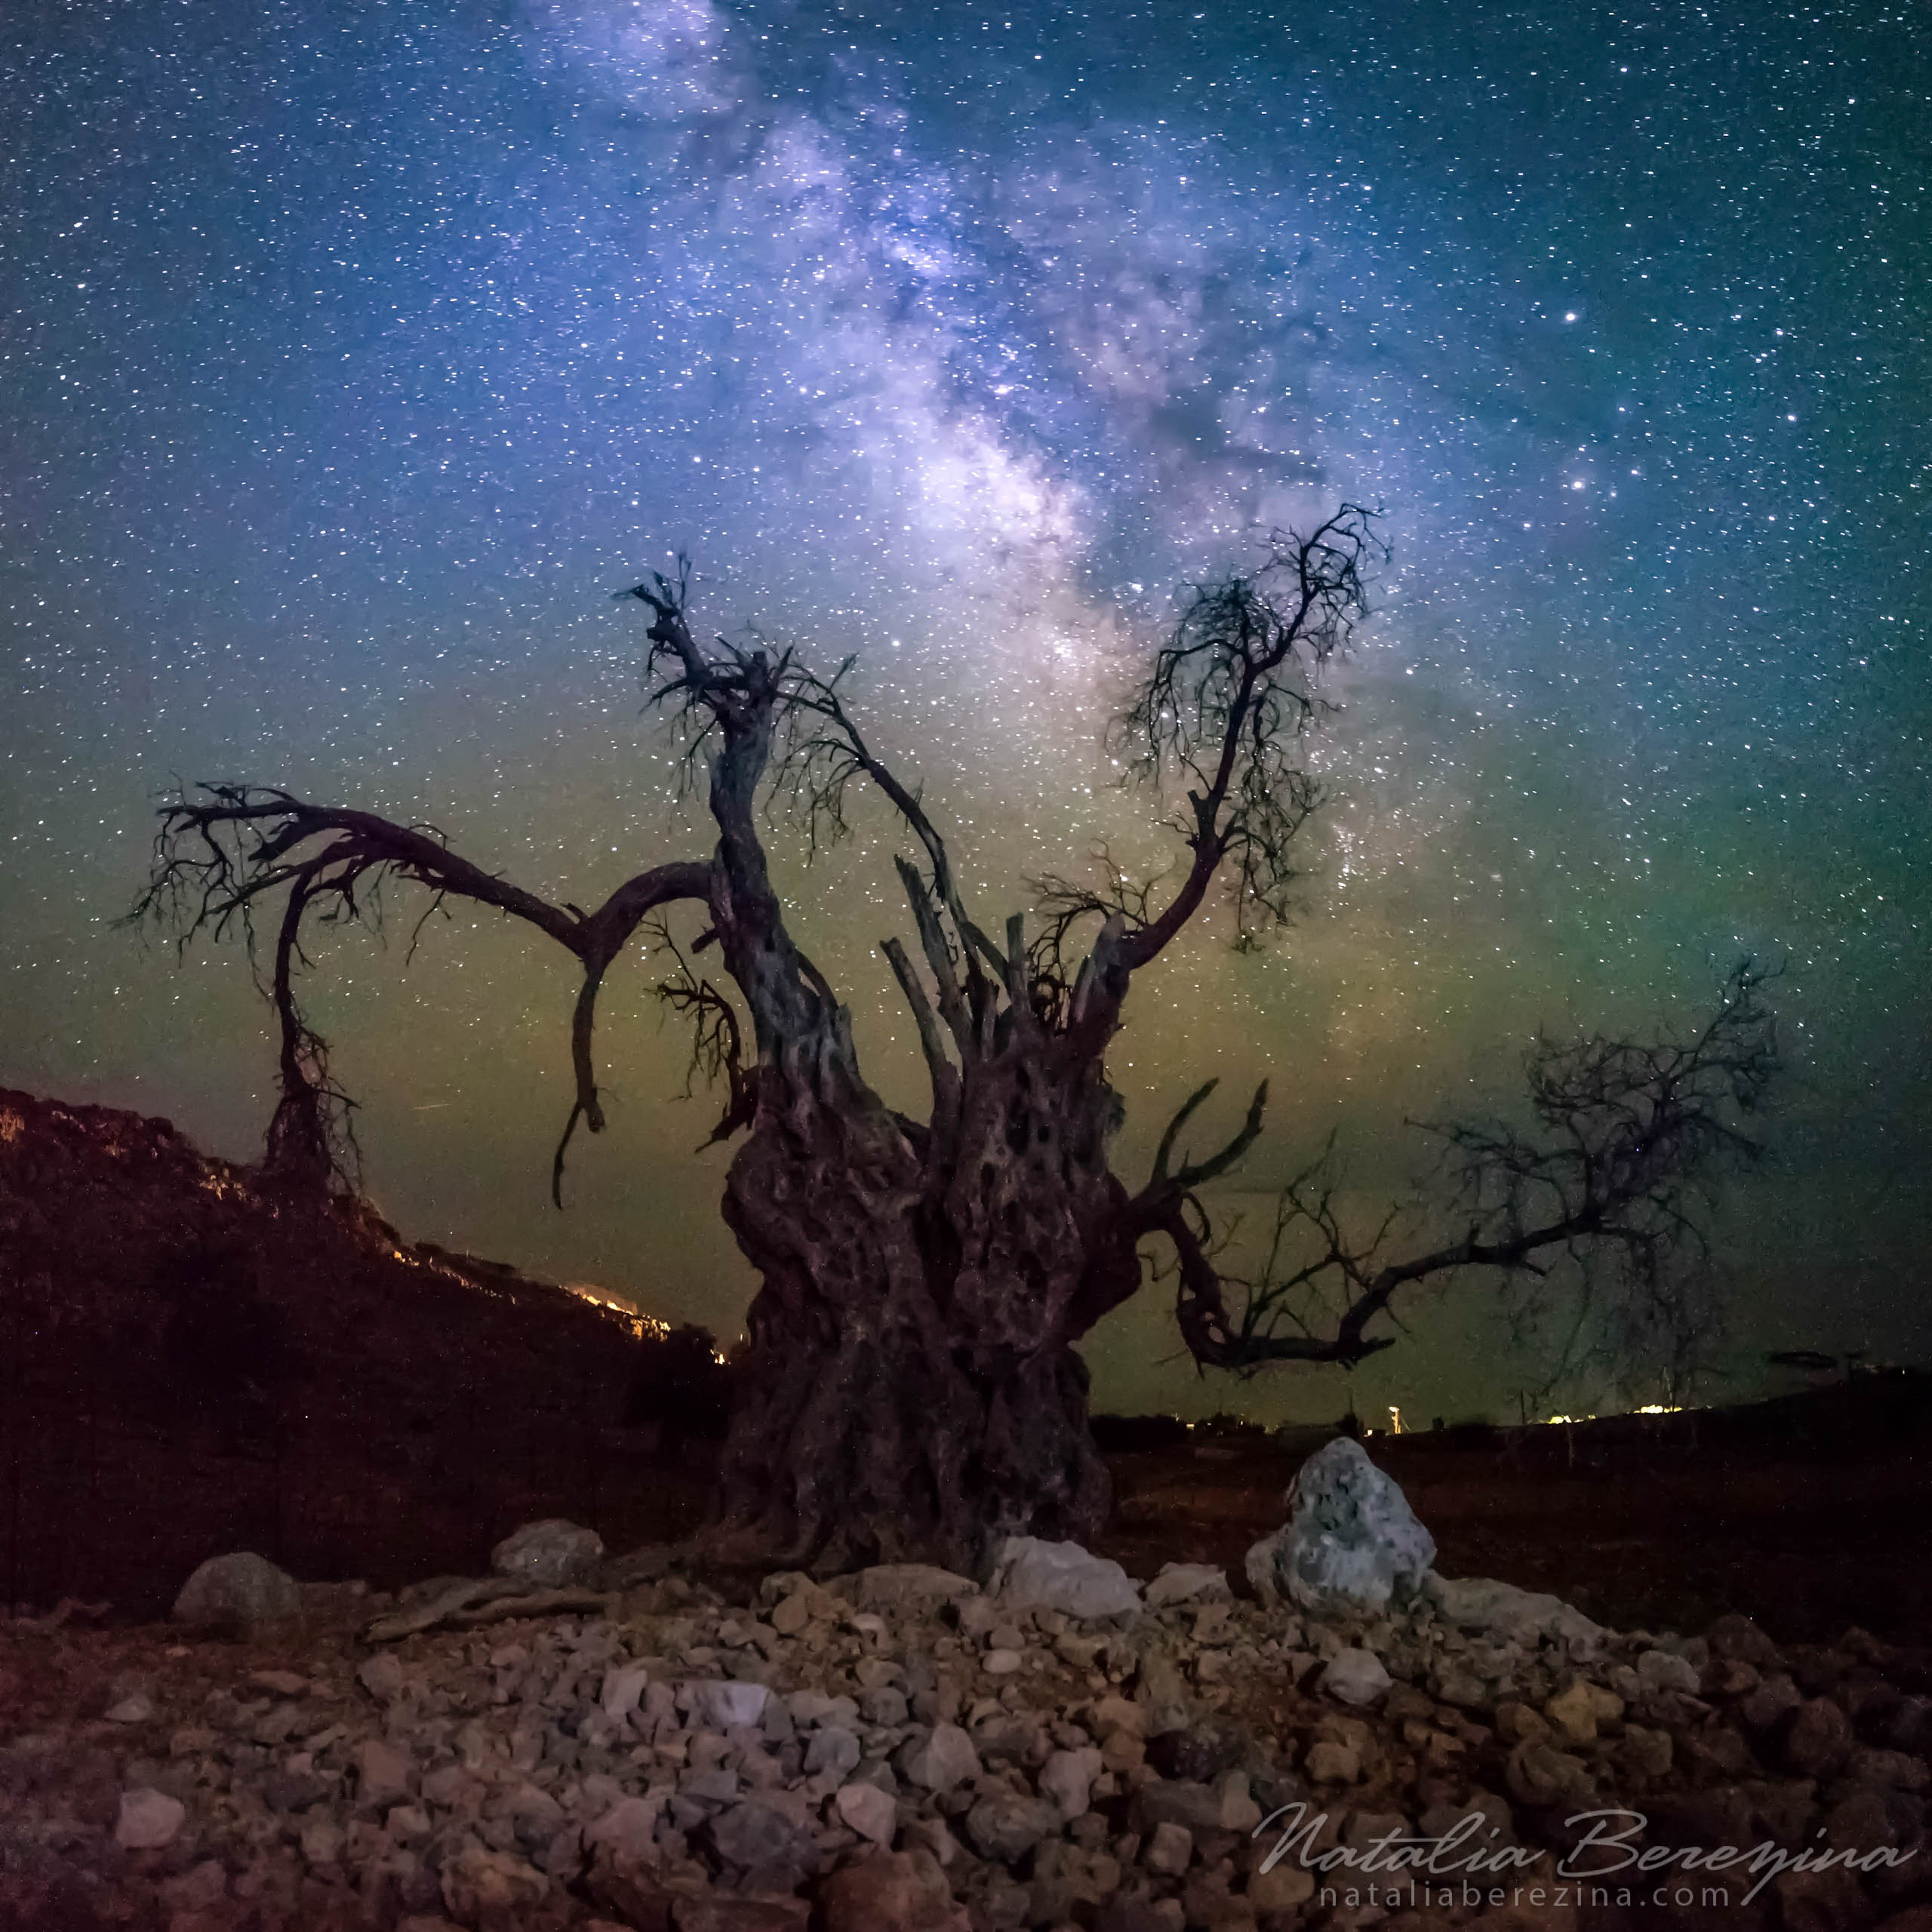 Greece, Crete, night time, star sky, Milky Way, tree, 1x1 CR1-NBDK1U9730 - Crete, Greece - Natalia Berezina Photography